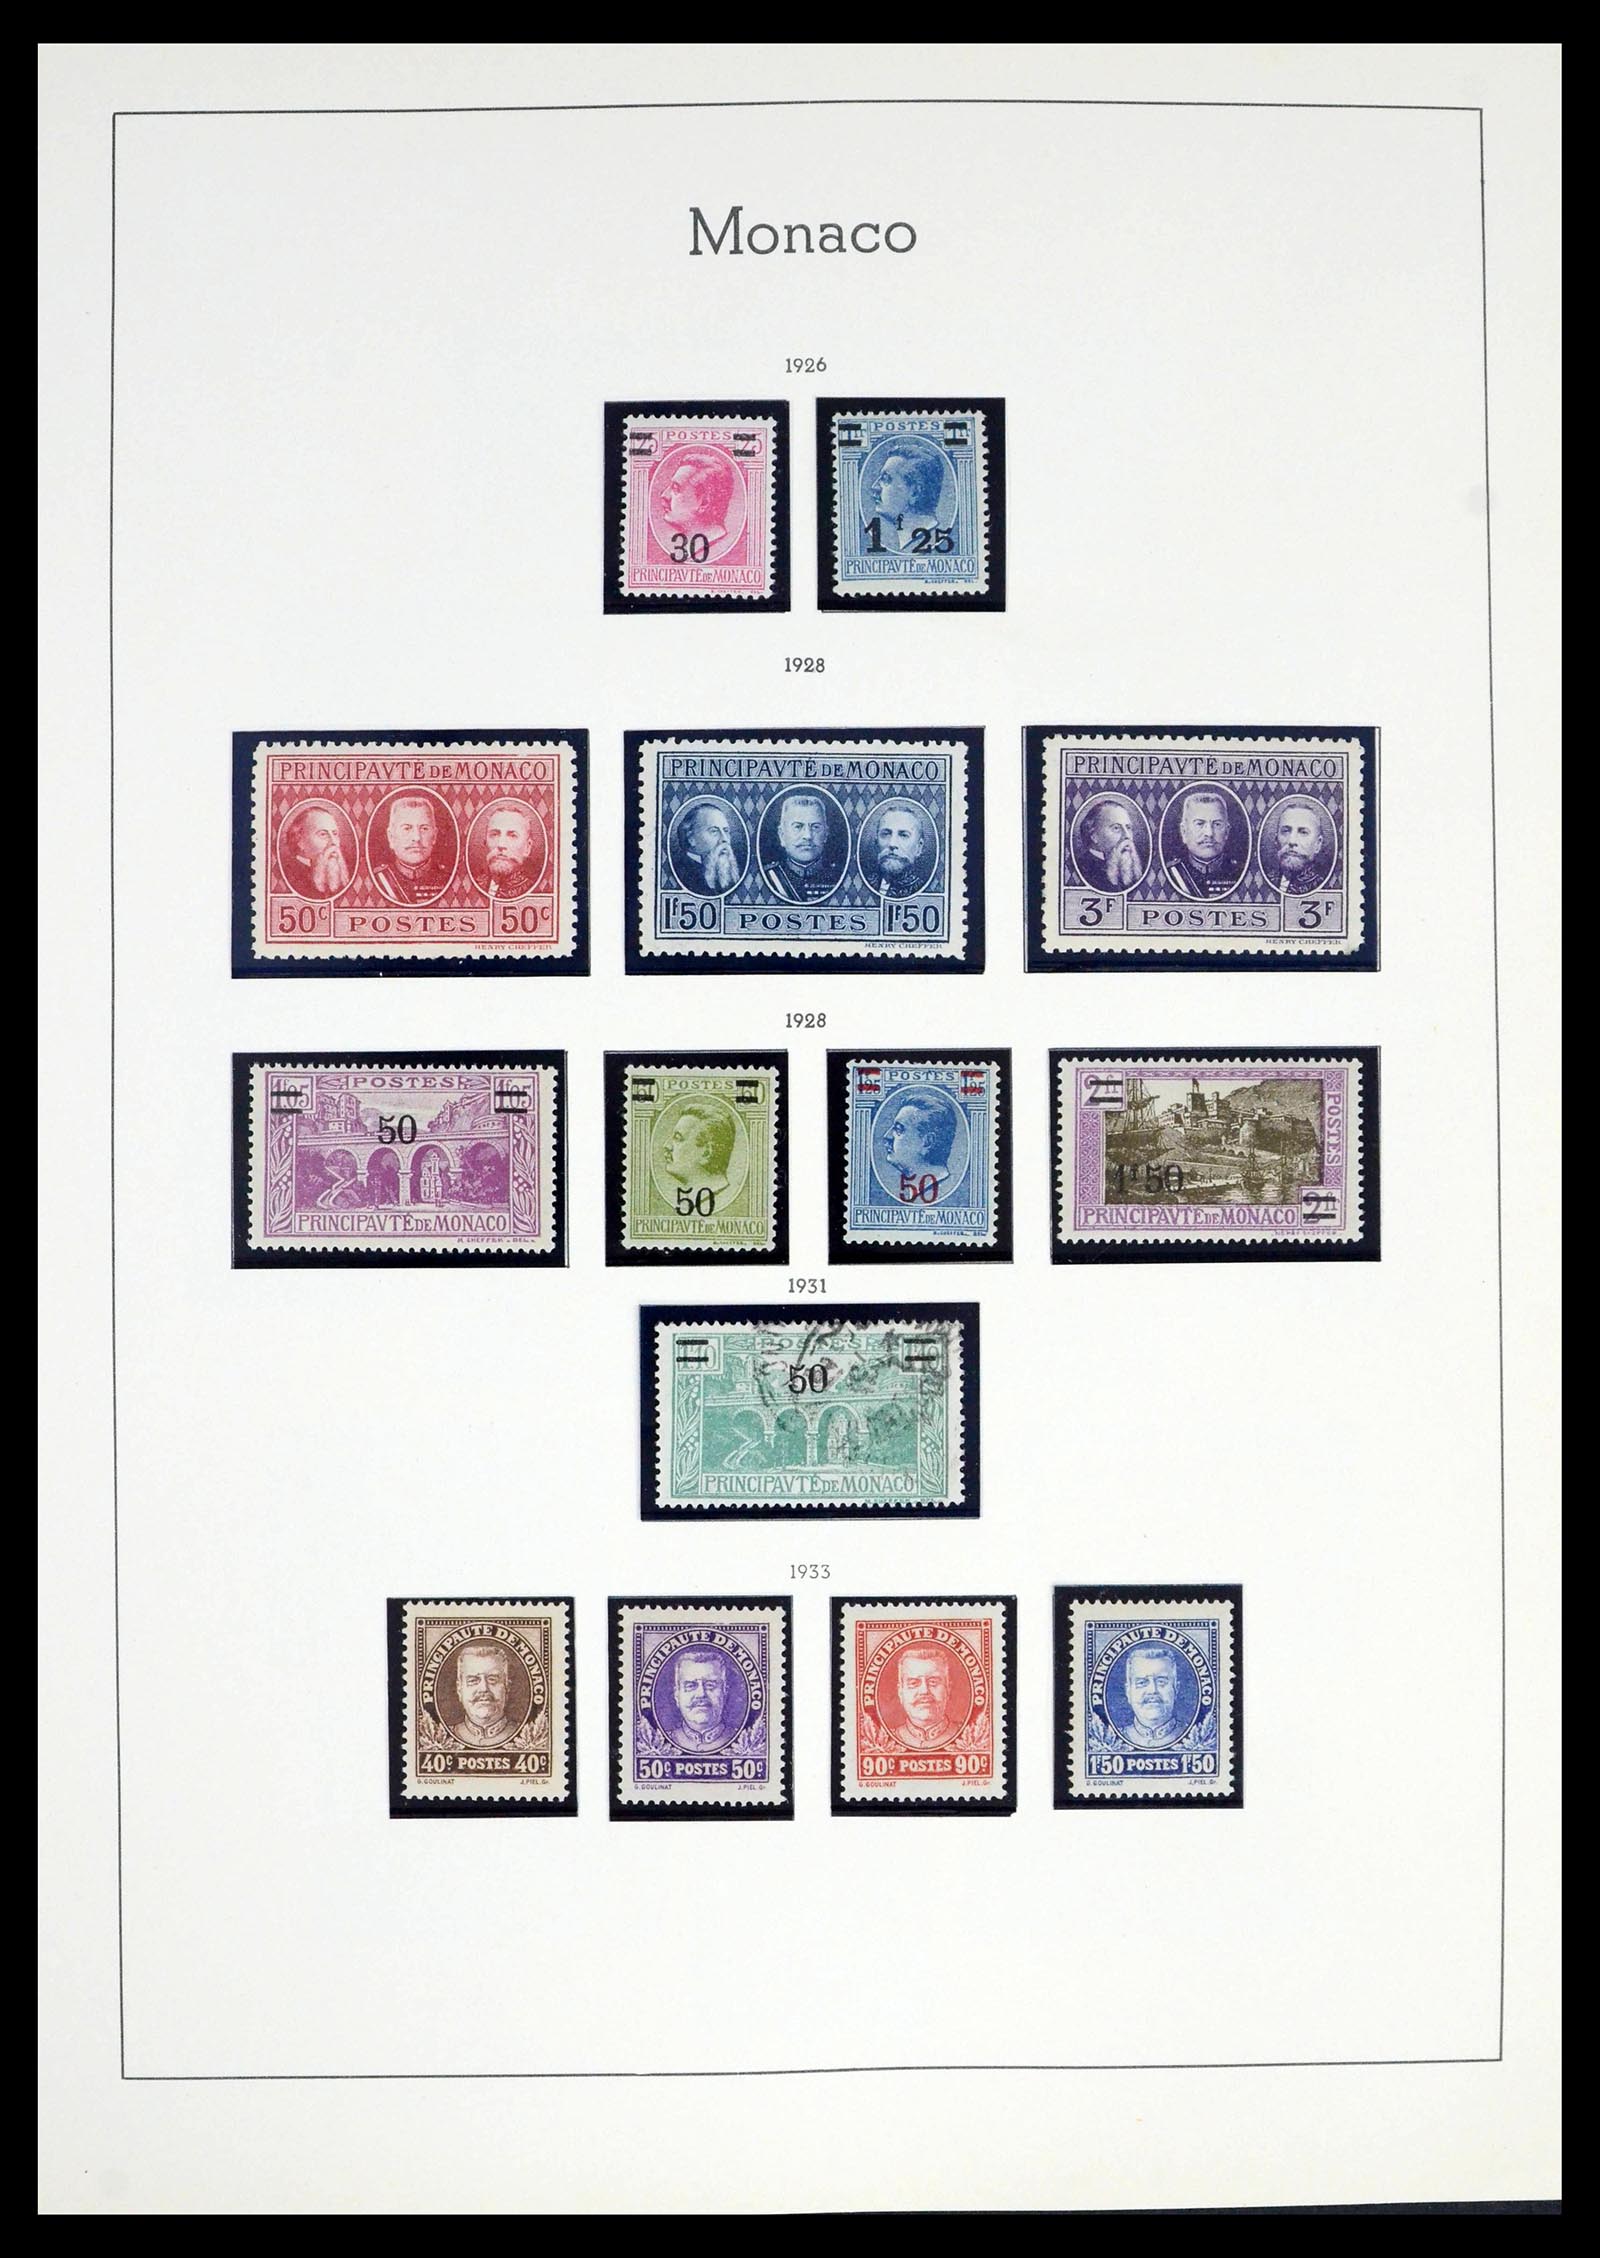 39392 0008 - Stamp collection 39392 Monaco 1885-1999.